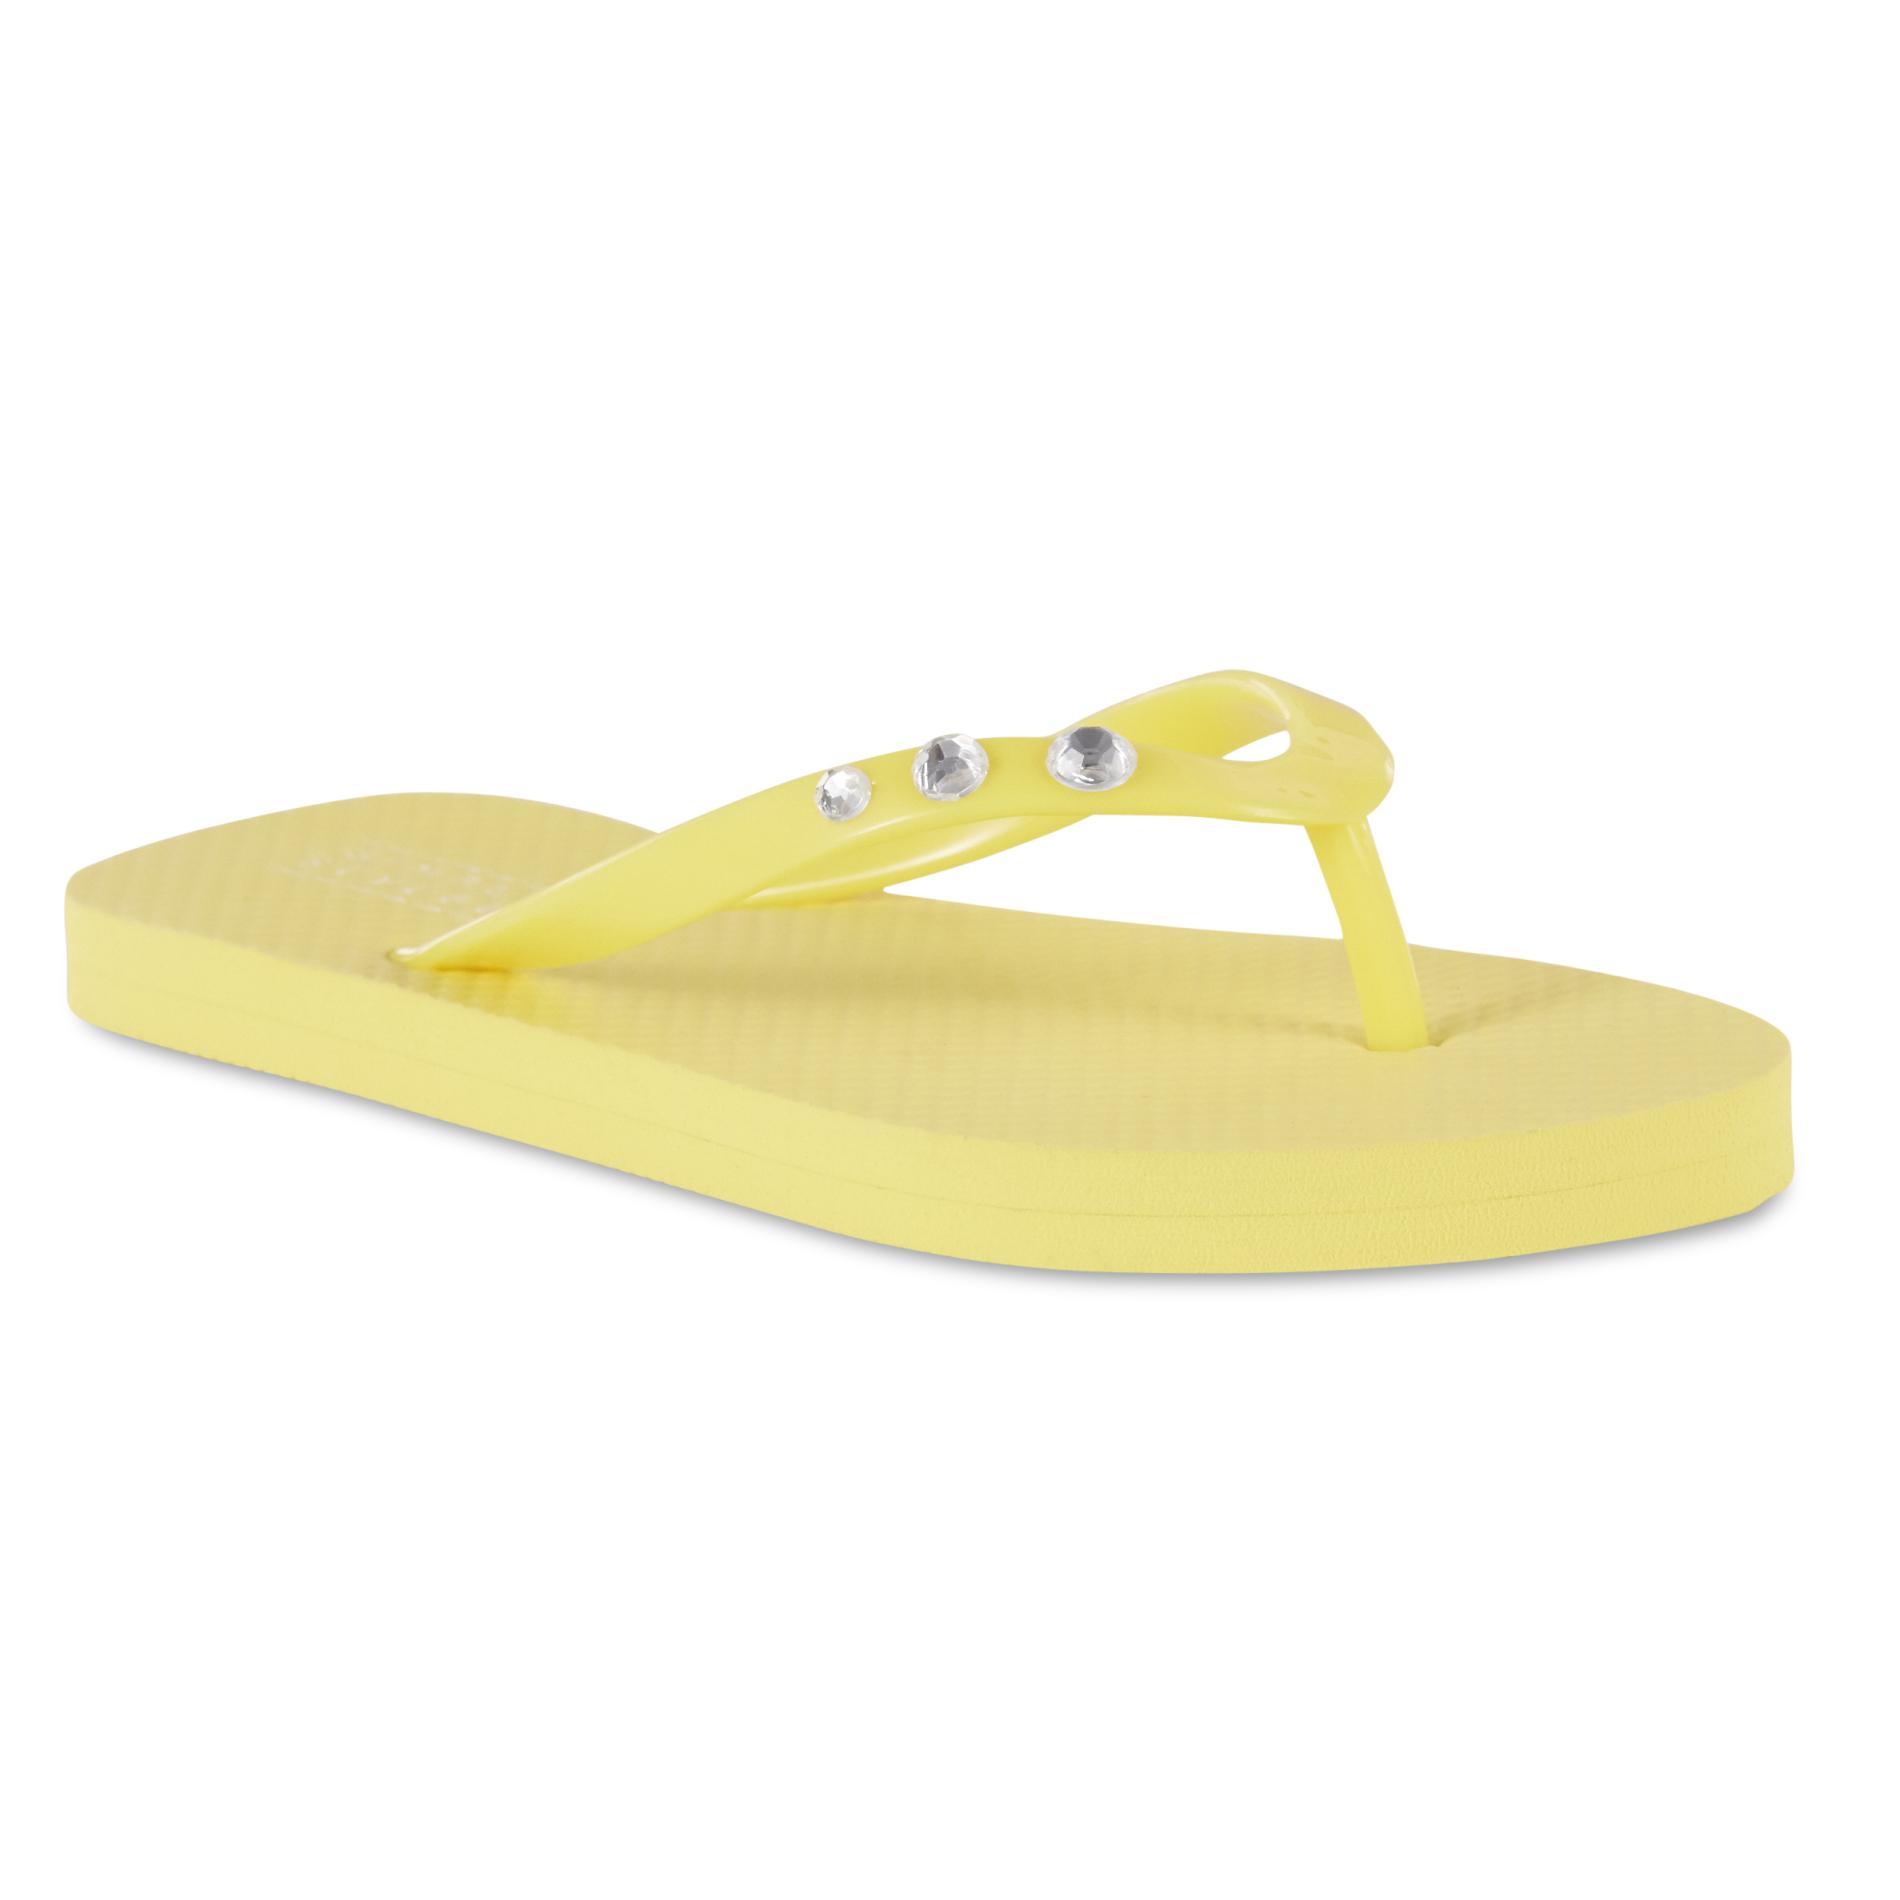 Simply Styled Girls' Yoga Flip-Flop Sandal - Yellow